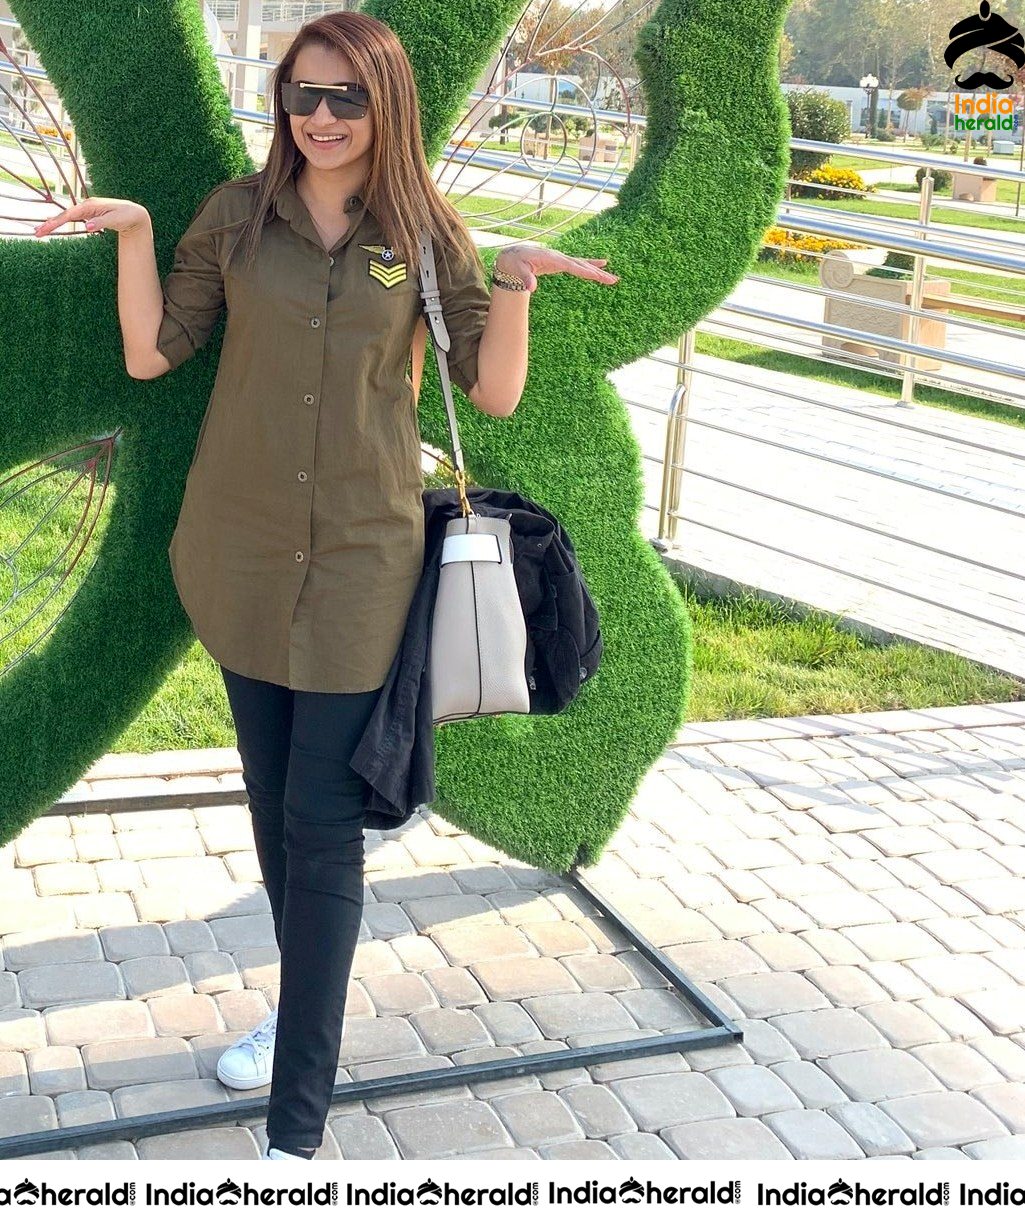 Latest Stills of Trisha from her Tour of Tashkent